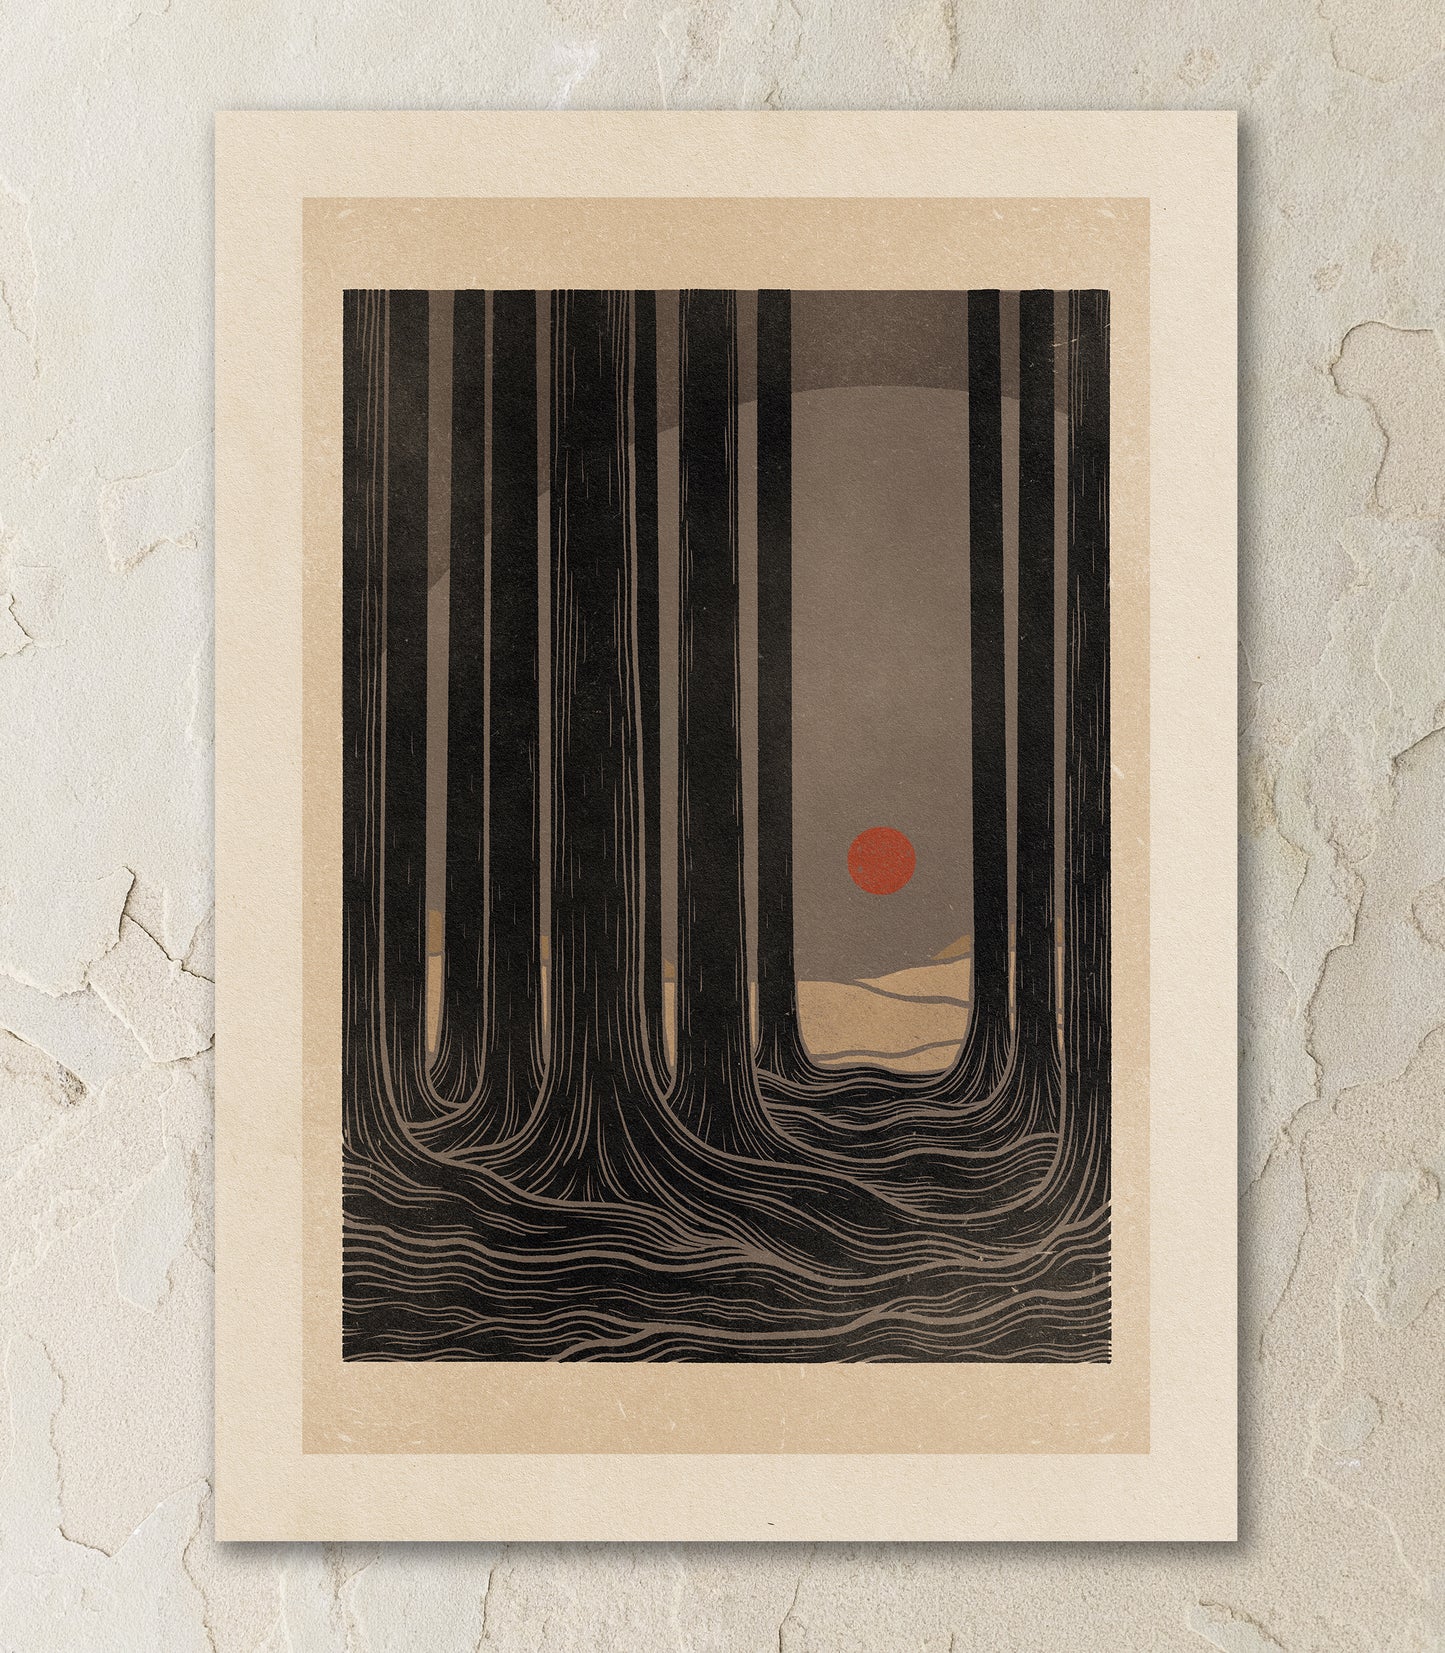 'Sunset forest' print